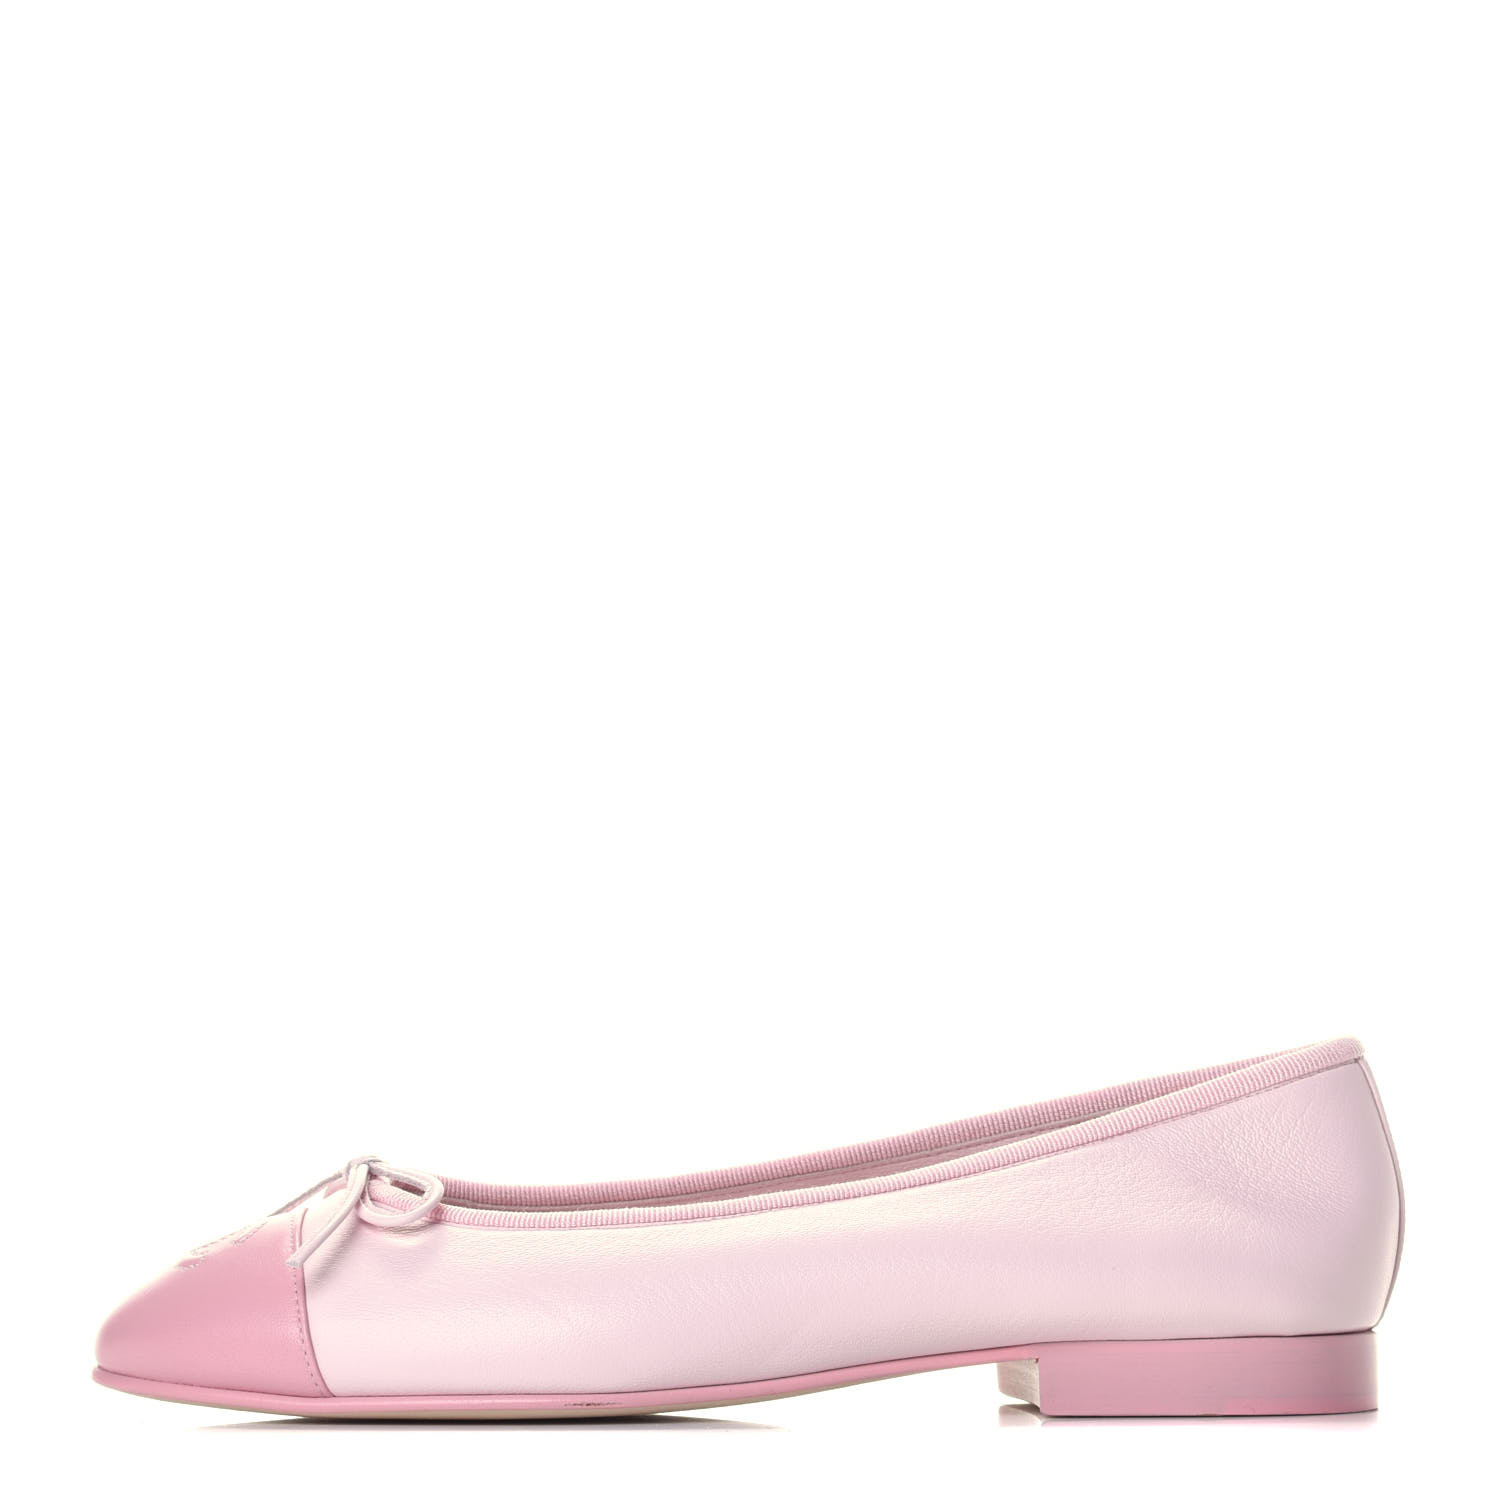 CHANEL CC Cap Toe Ballerina Flats 37.5 Light Pink 763271 FASHIONPHILE